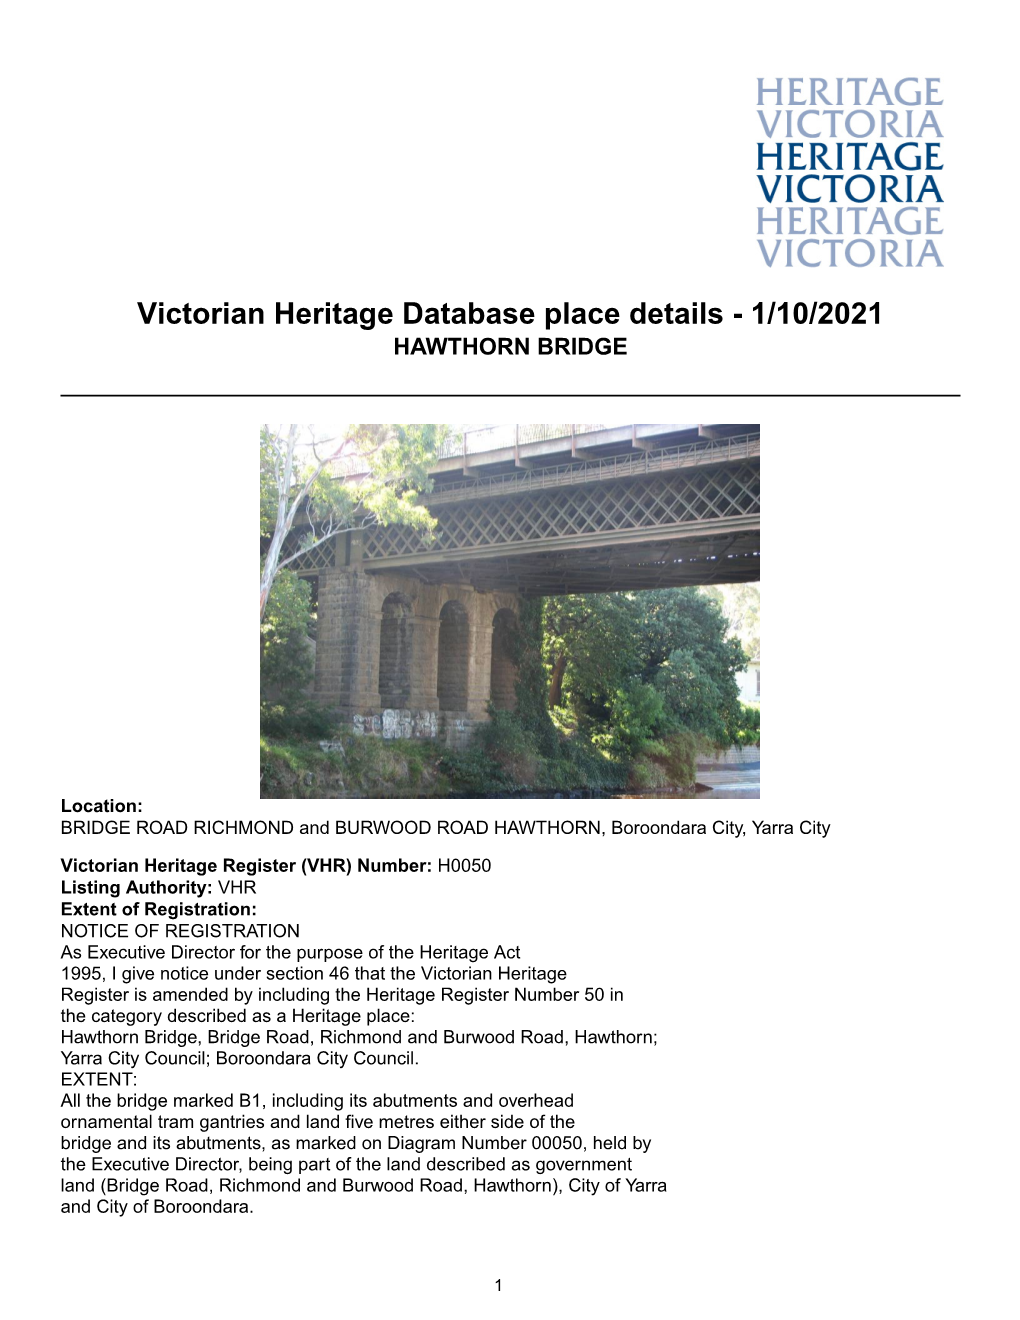 Victorian Heritage Database Place Details - 1/10/2021 HAWTHORN BRIDGE